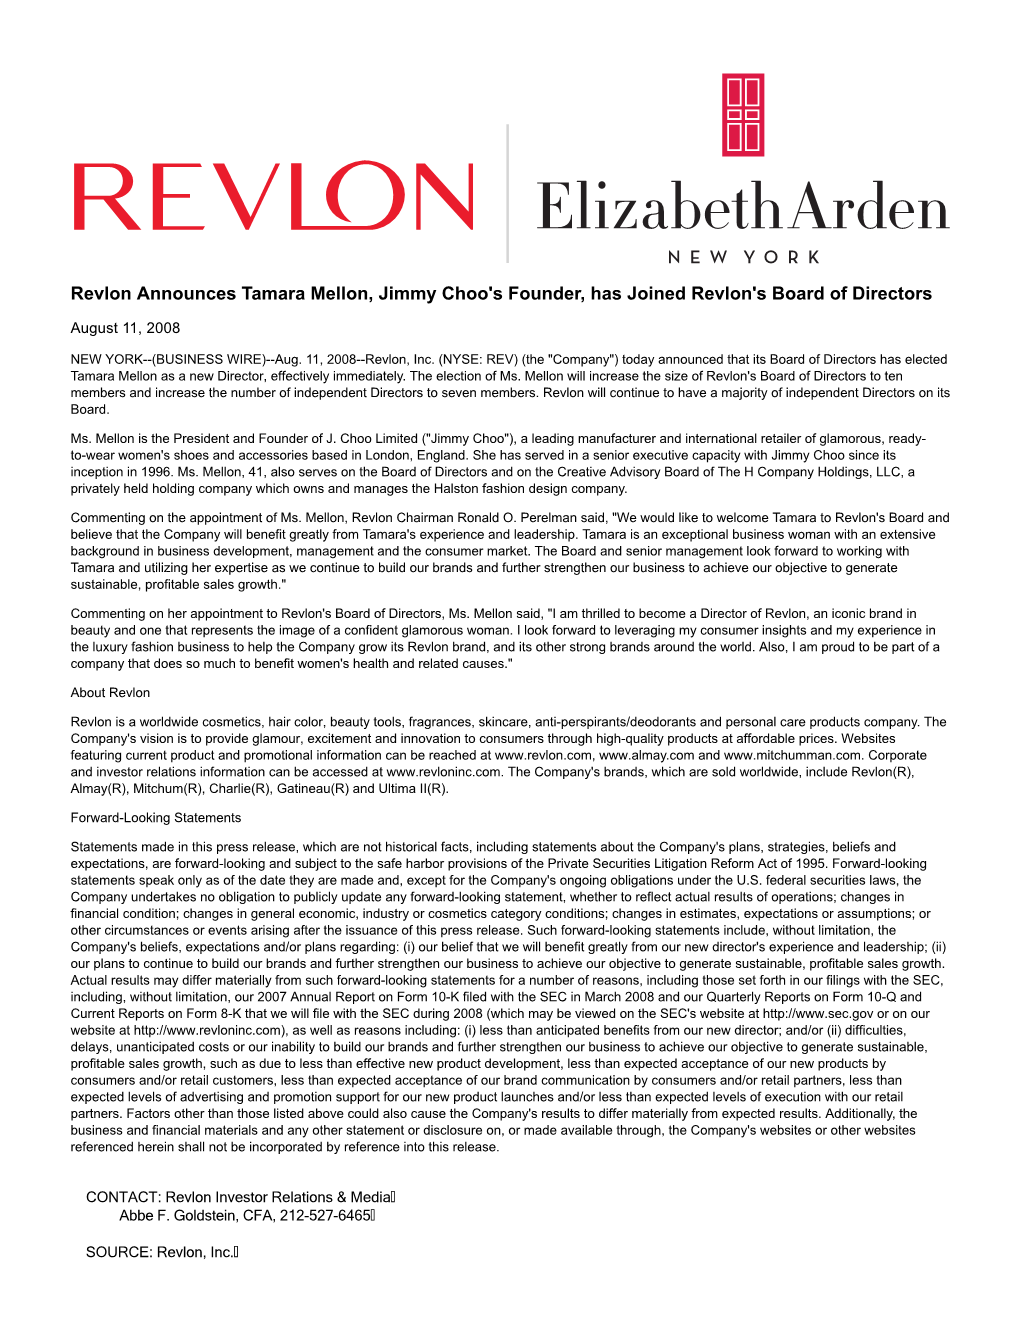 Revlon Announces Tamara Mellon, Jimmy Choo's Founder, Has Joined Revlon's Board of Directors